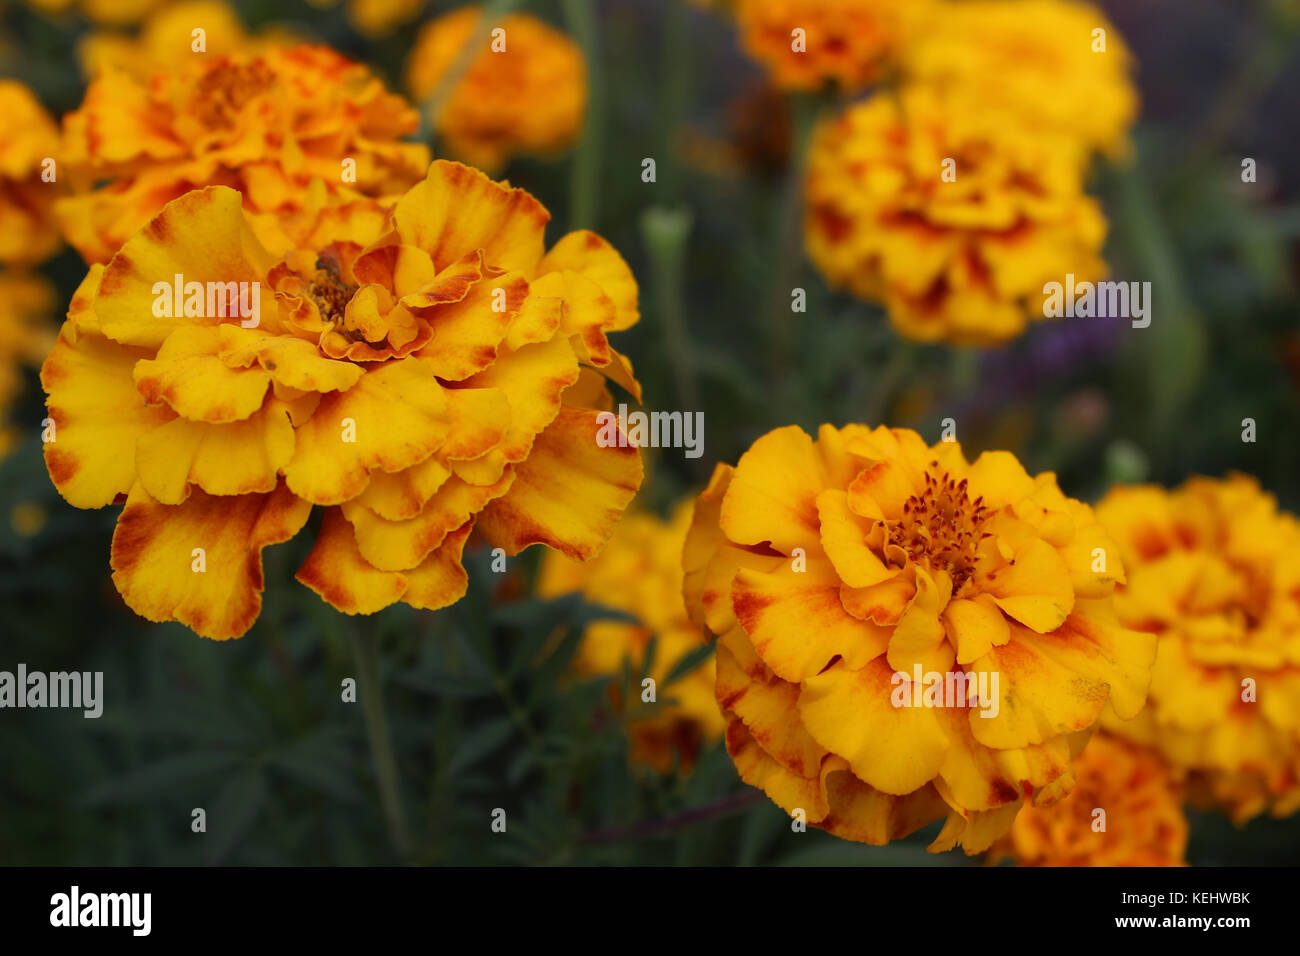 Yellow marigolds in the garden Stock Photo